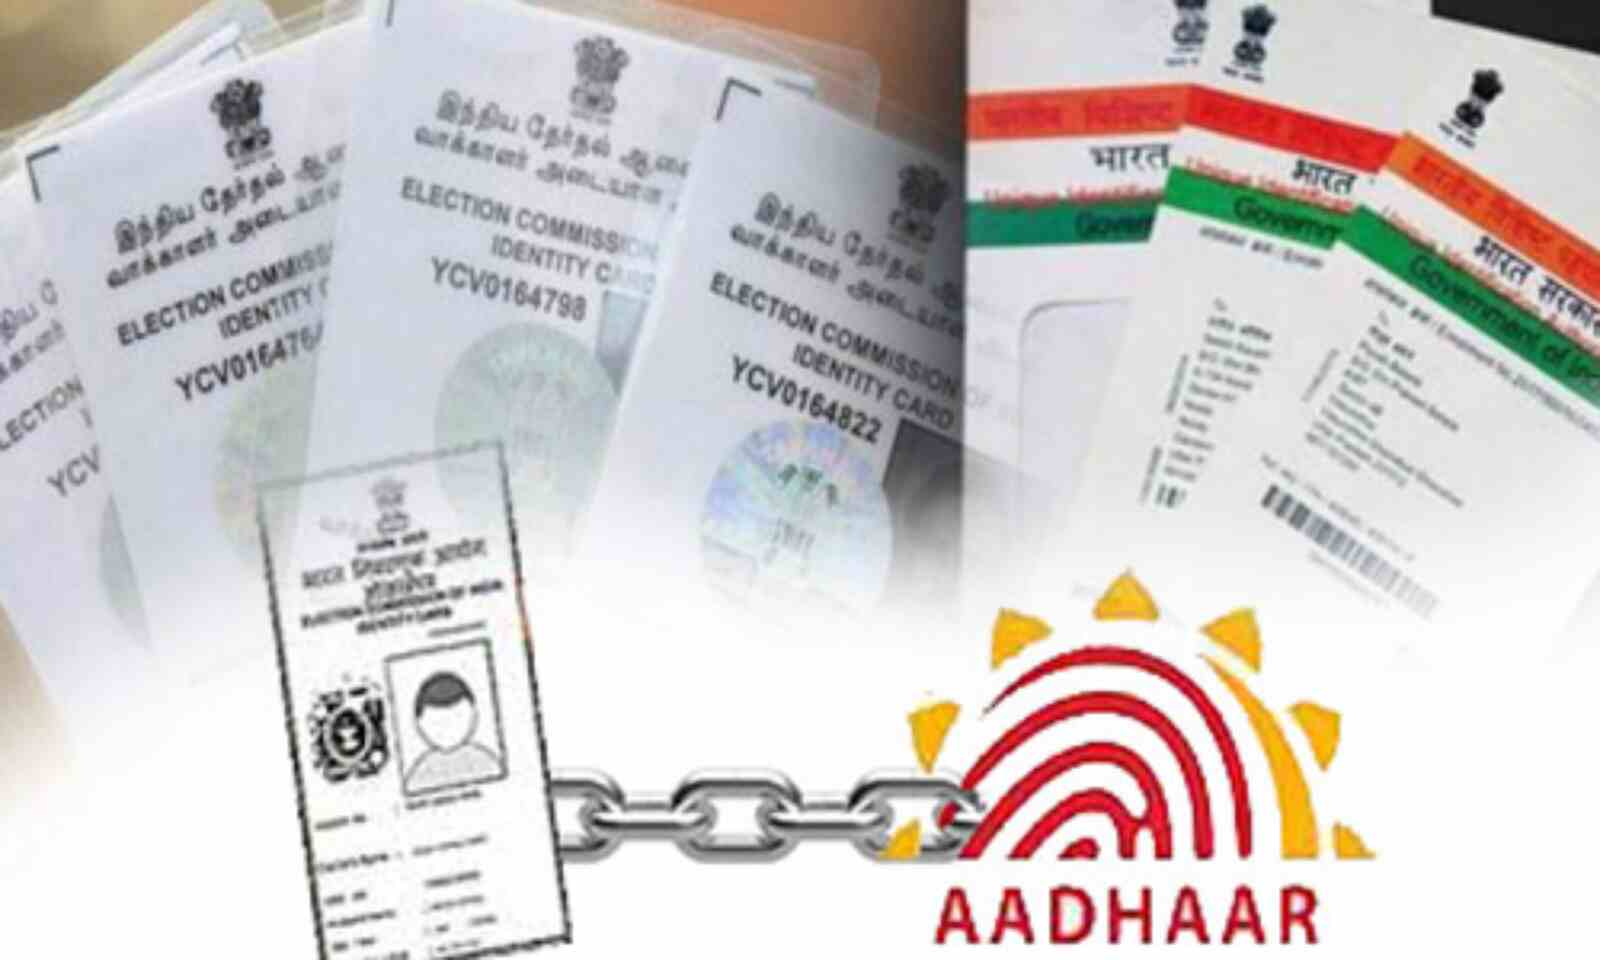 Aadhaar number not mandatory for authenticating electoral registration